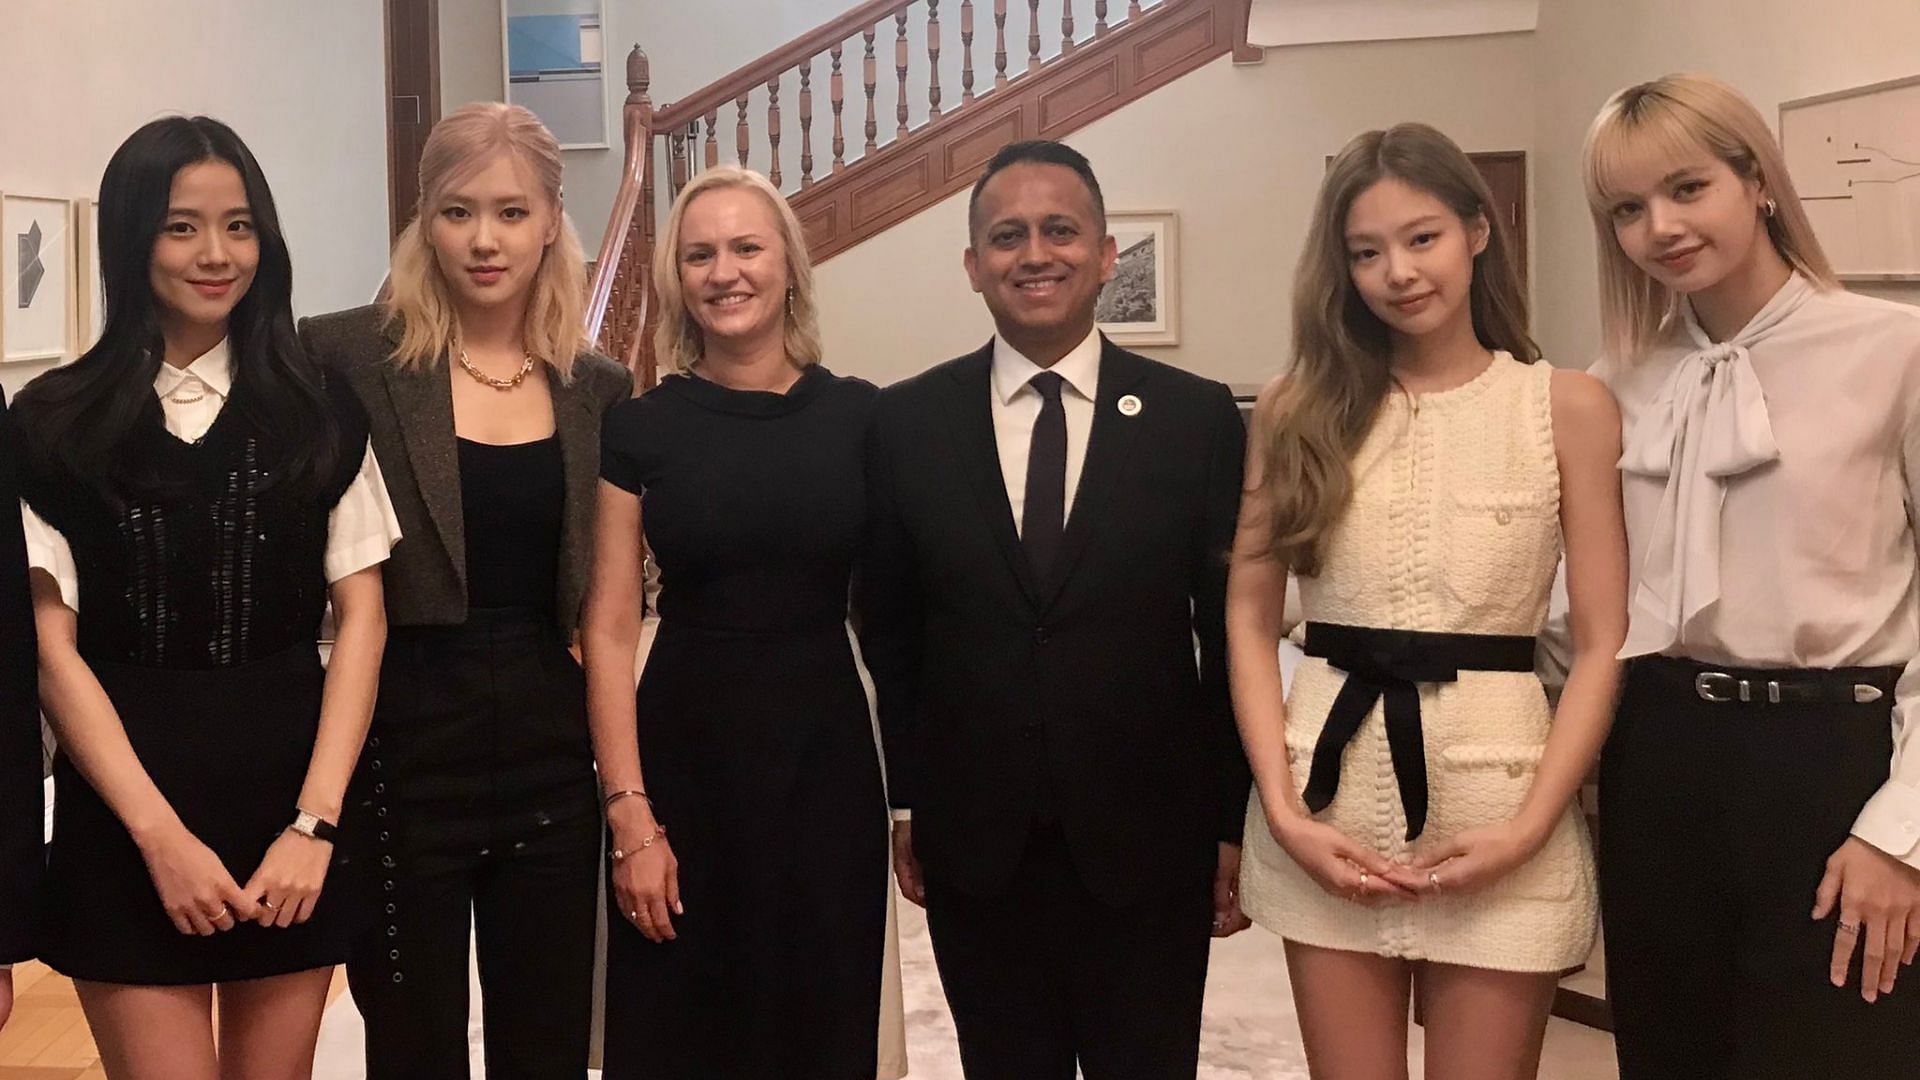 The K-pop girl group visits British Embassy in Seoul (Image via @UKinKorean/Twitter)